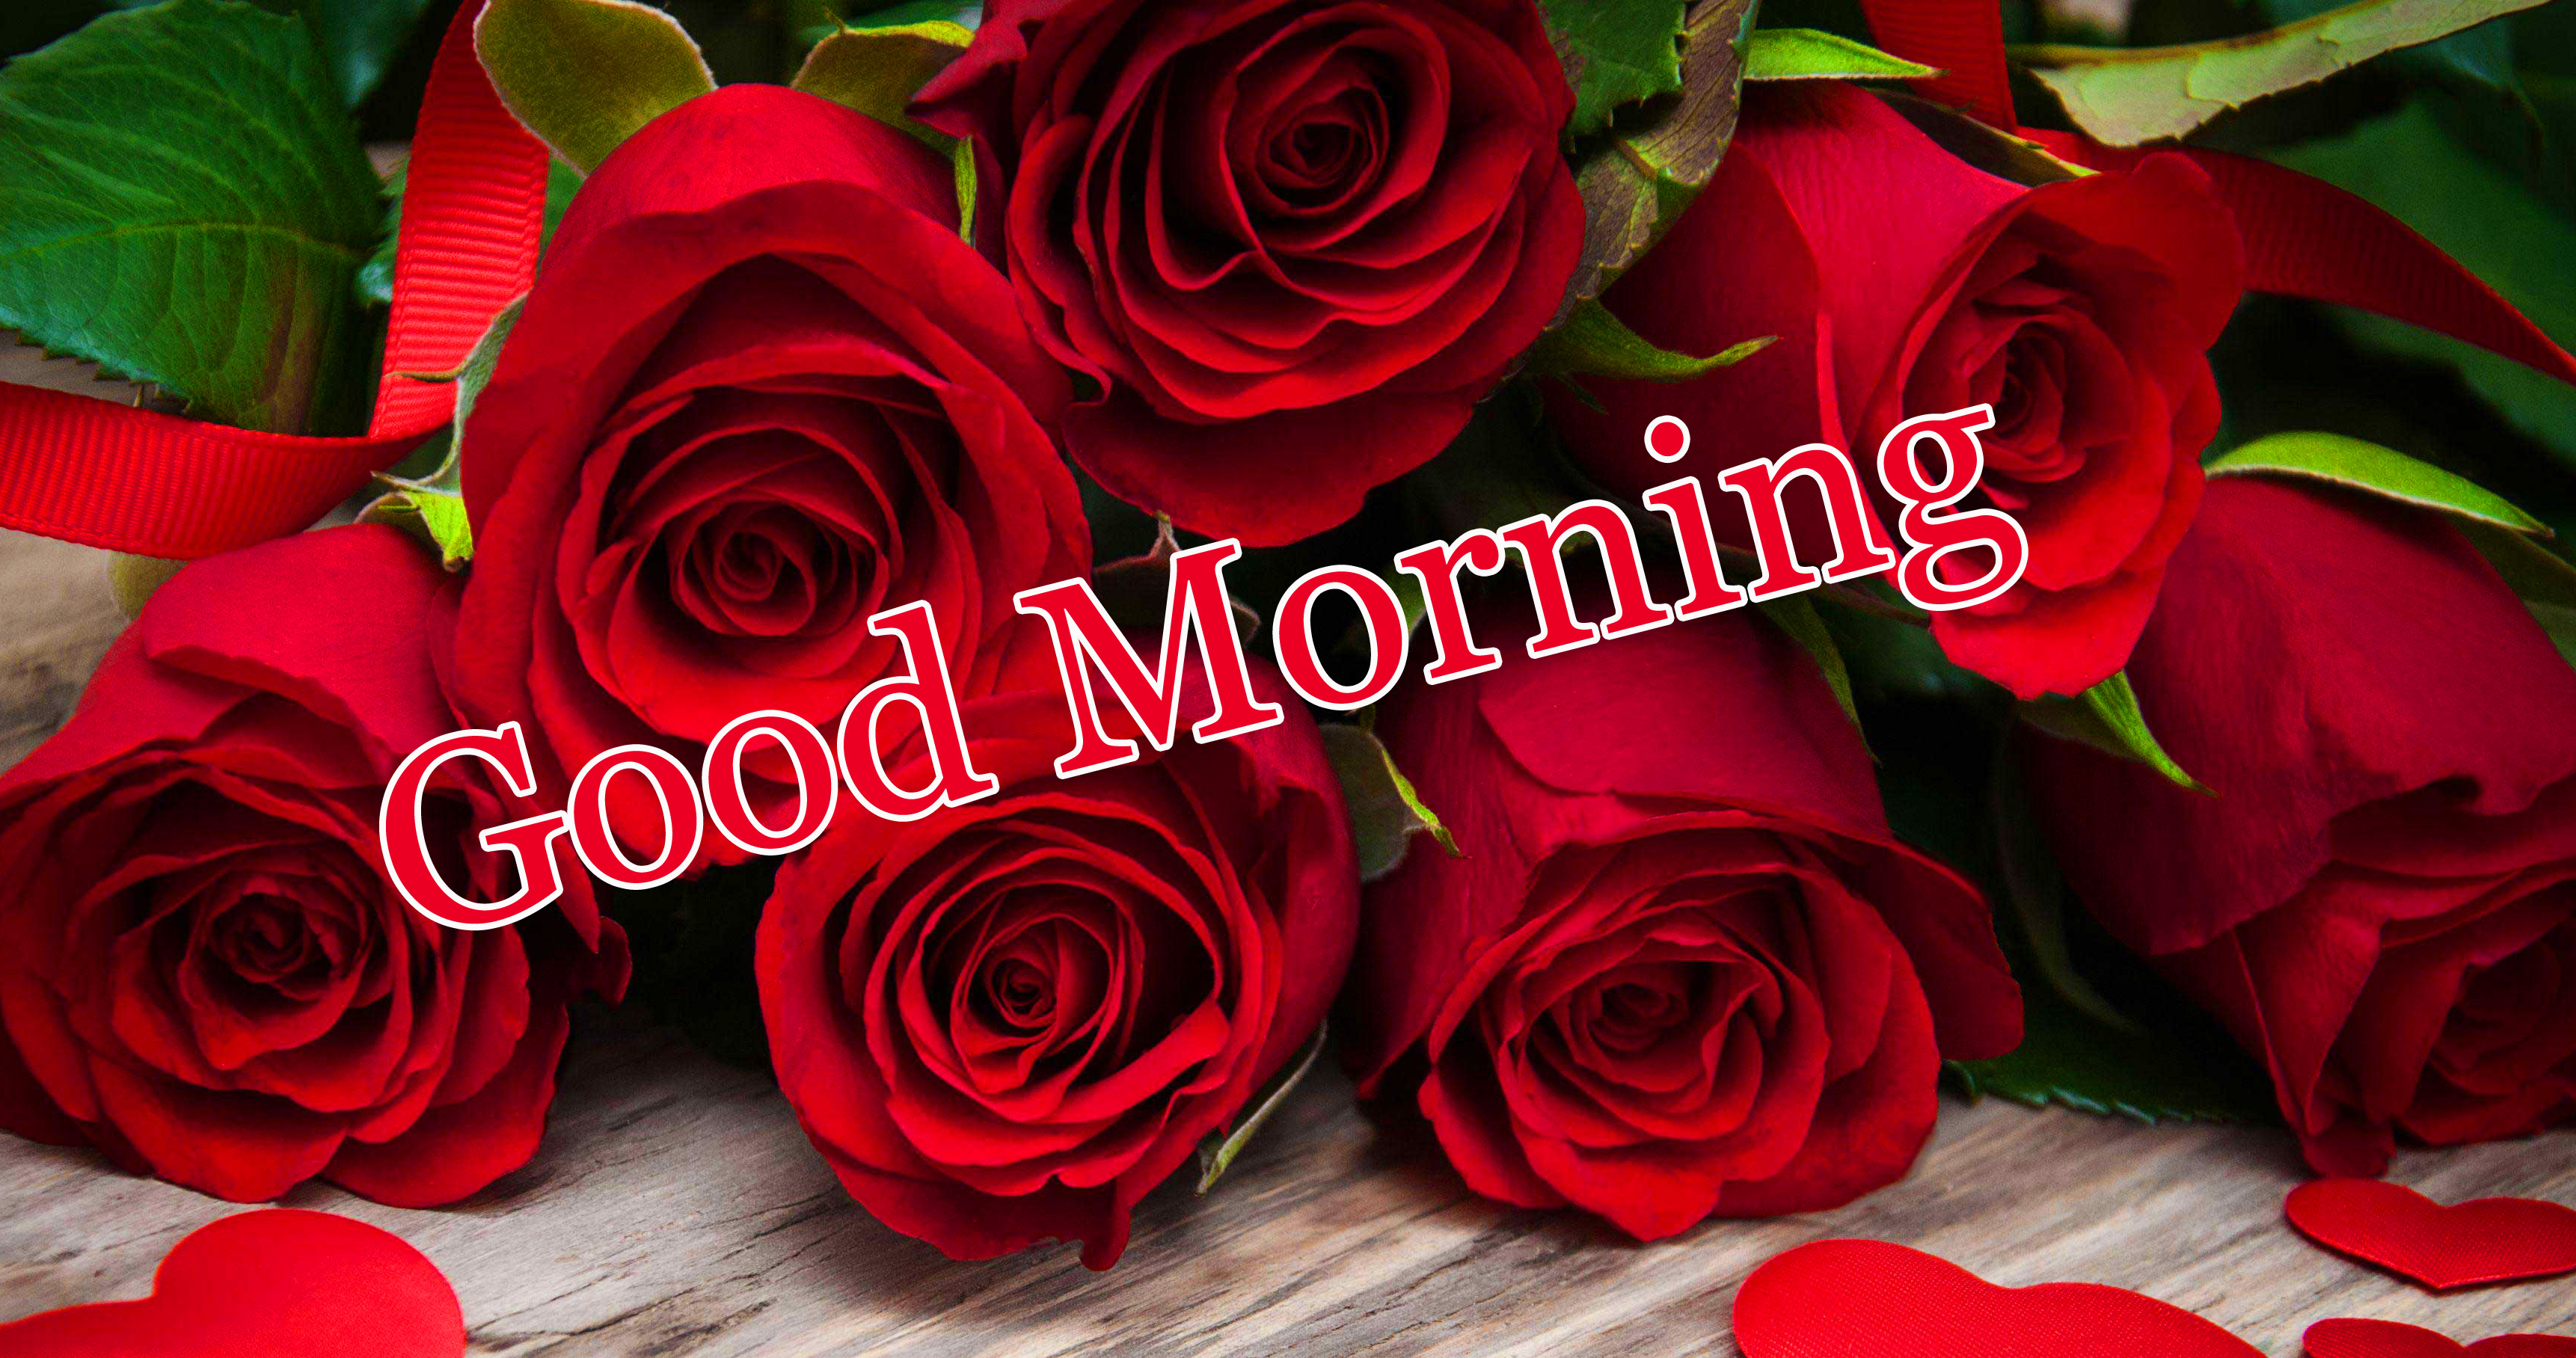 Red Rose free Good Morning Wallpaper Pics Download 